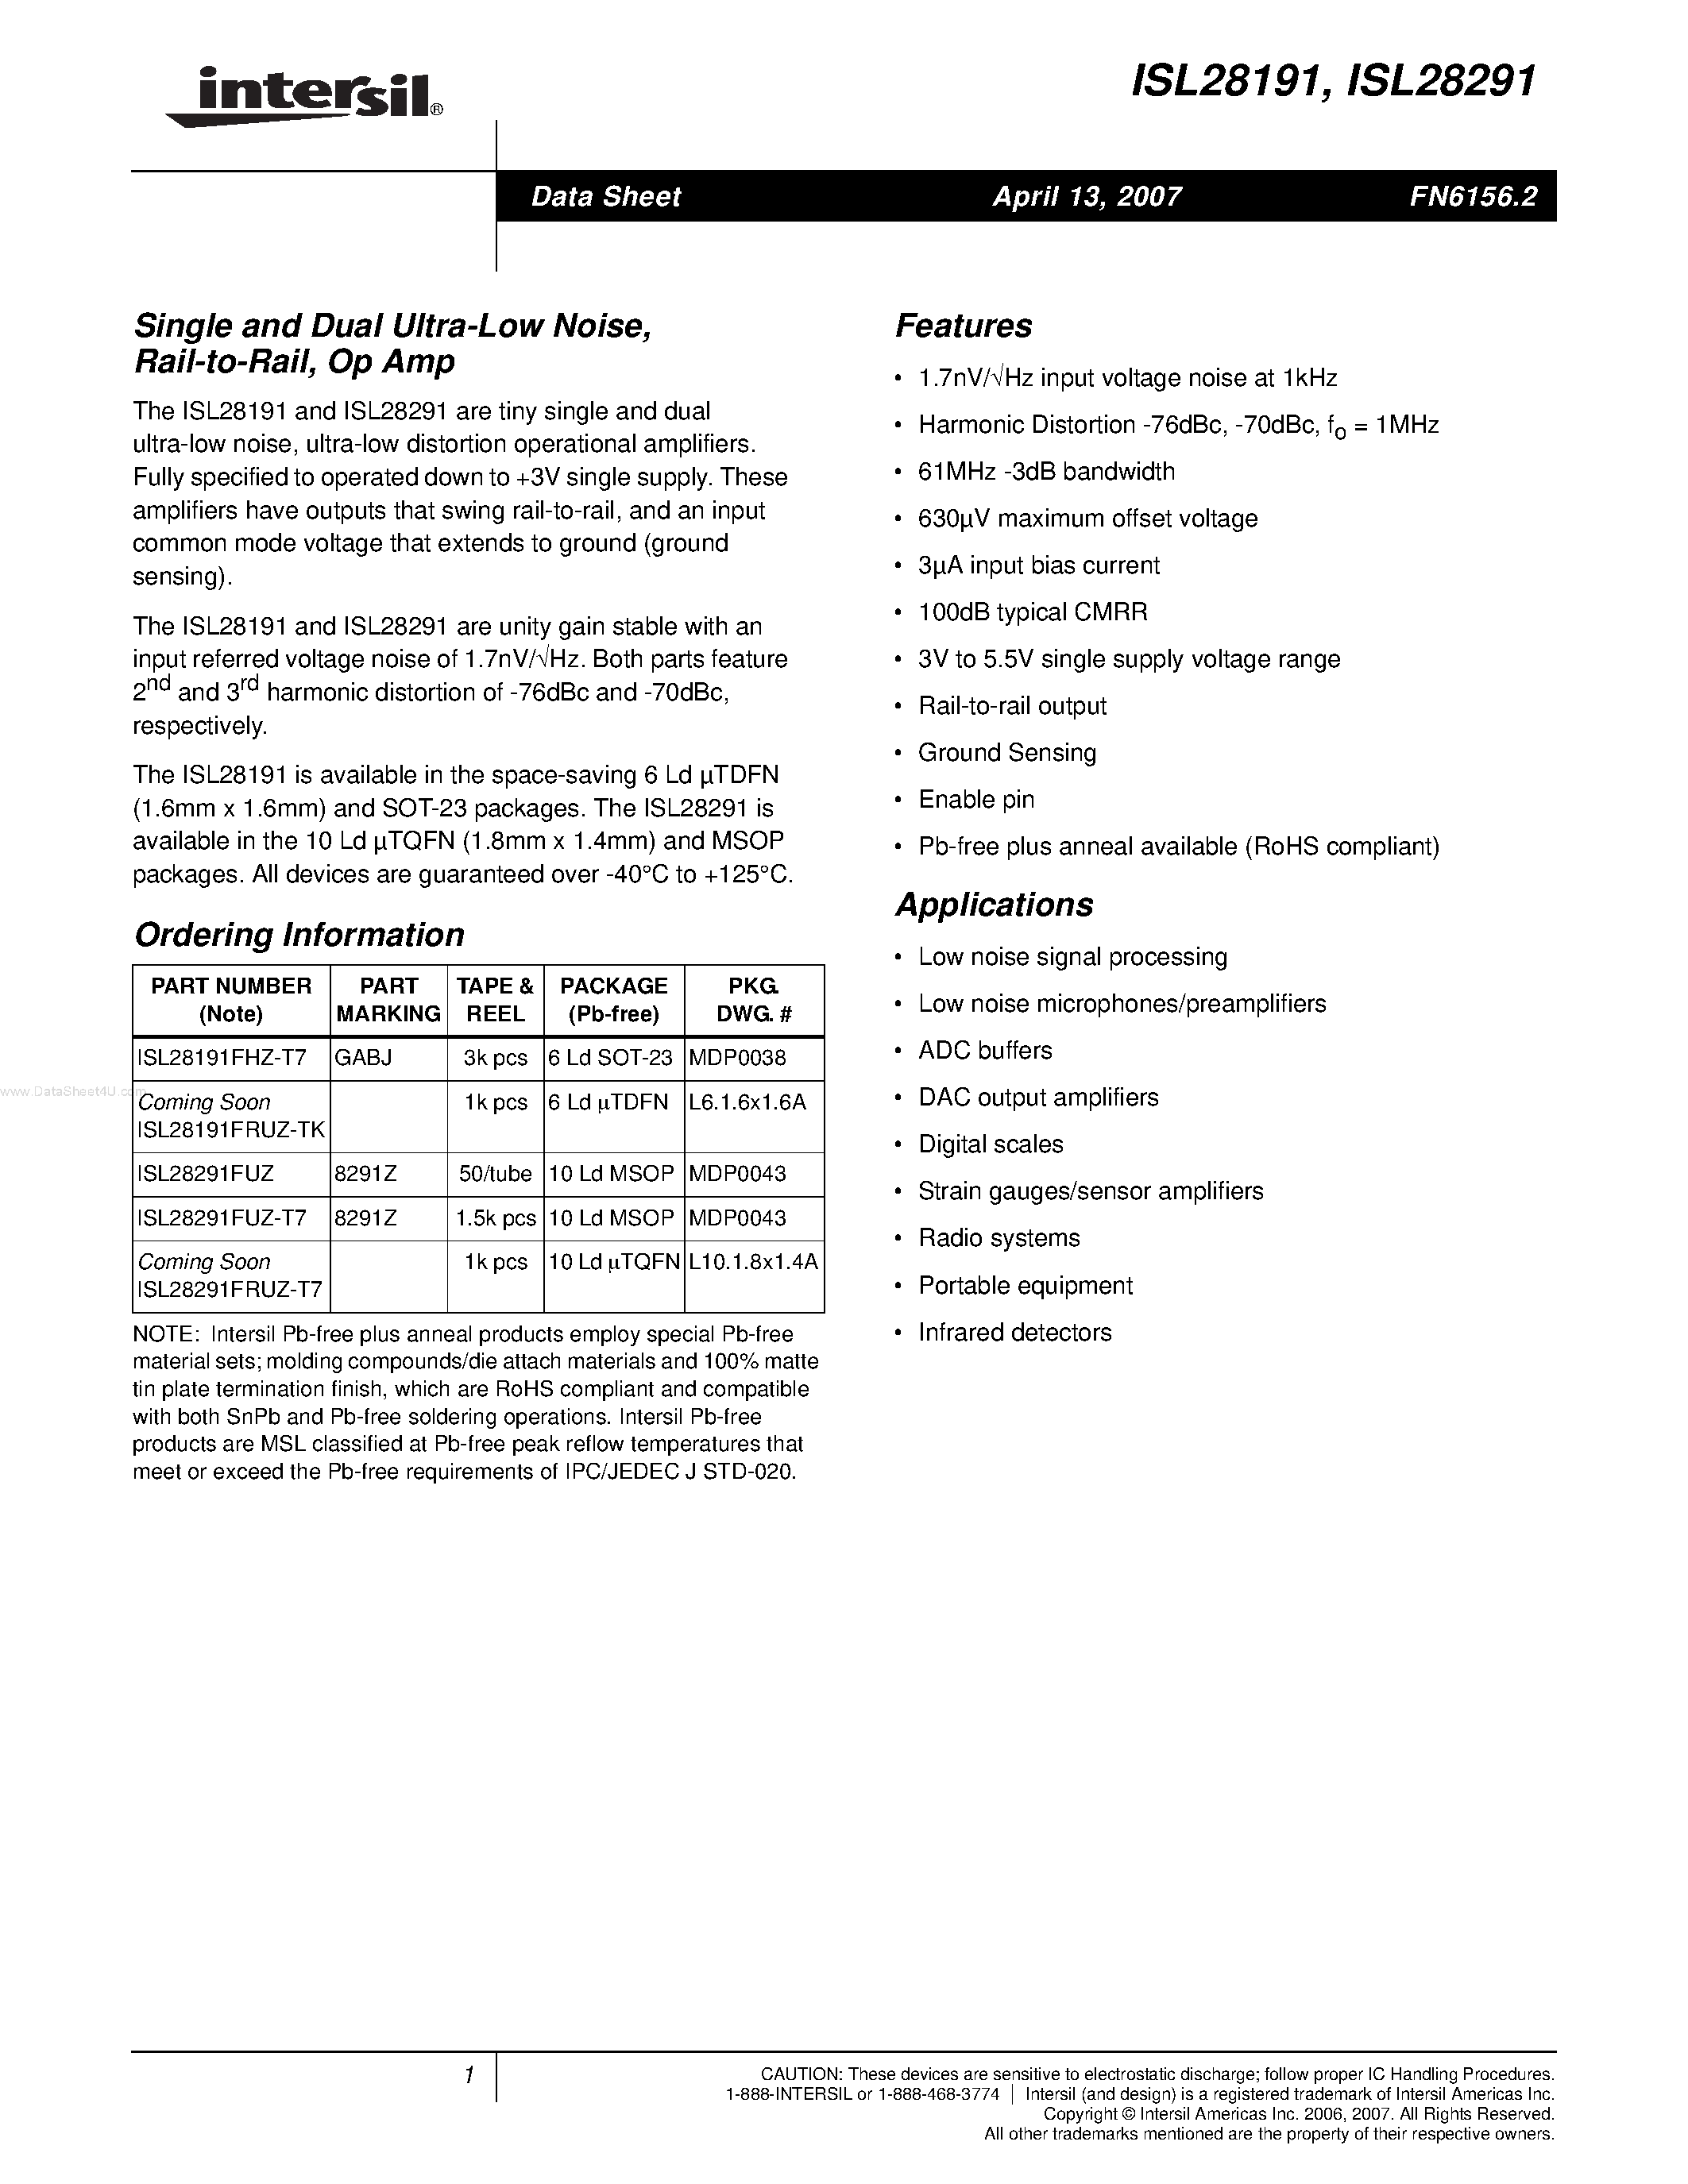 Datasheet ISL28291 - (ISL28191 / ISL28291) Single and Dual Ultra-Low Noise Rail-to-Rail Op Amp page 1